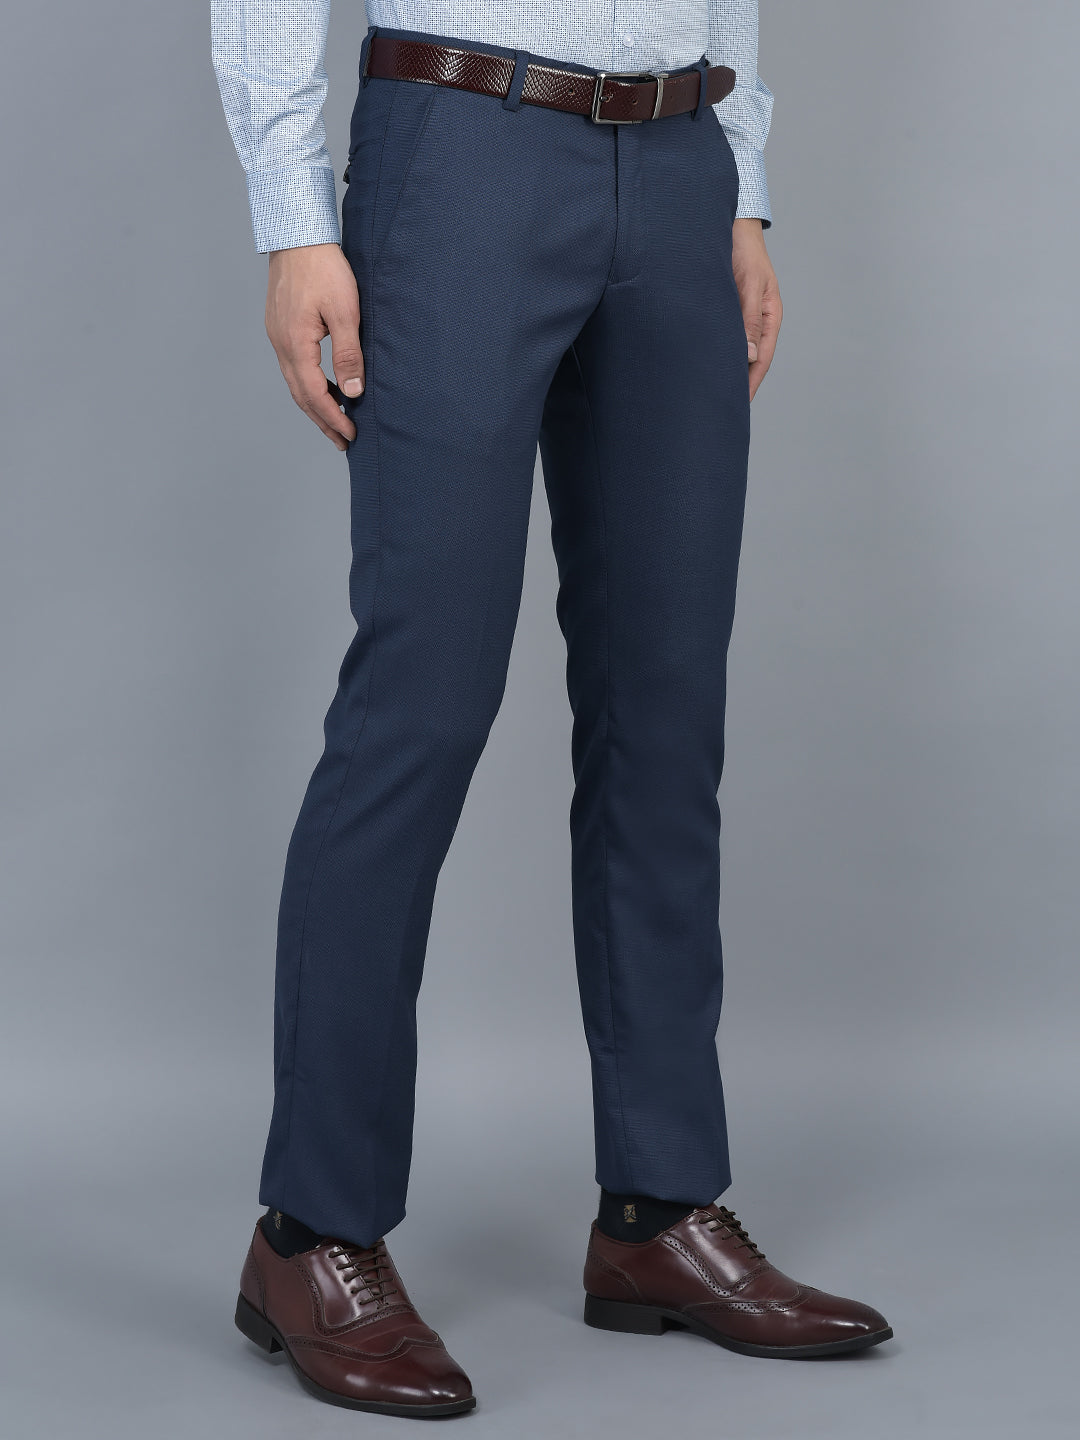 Buy Men Navy Solid Slim Fit Formal Trousers Online - 689835 | Peter England